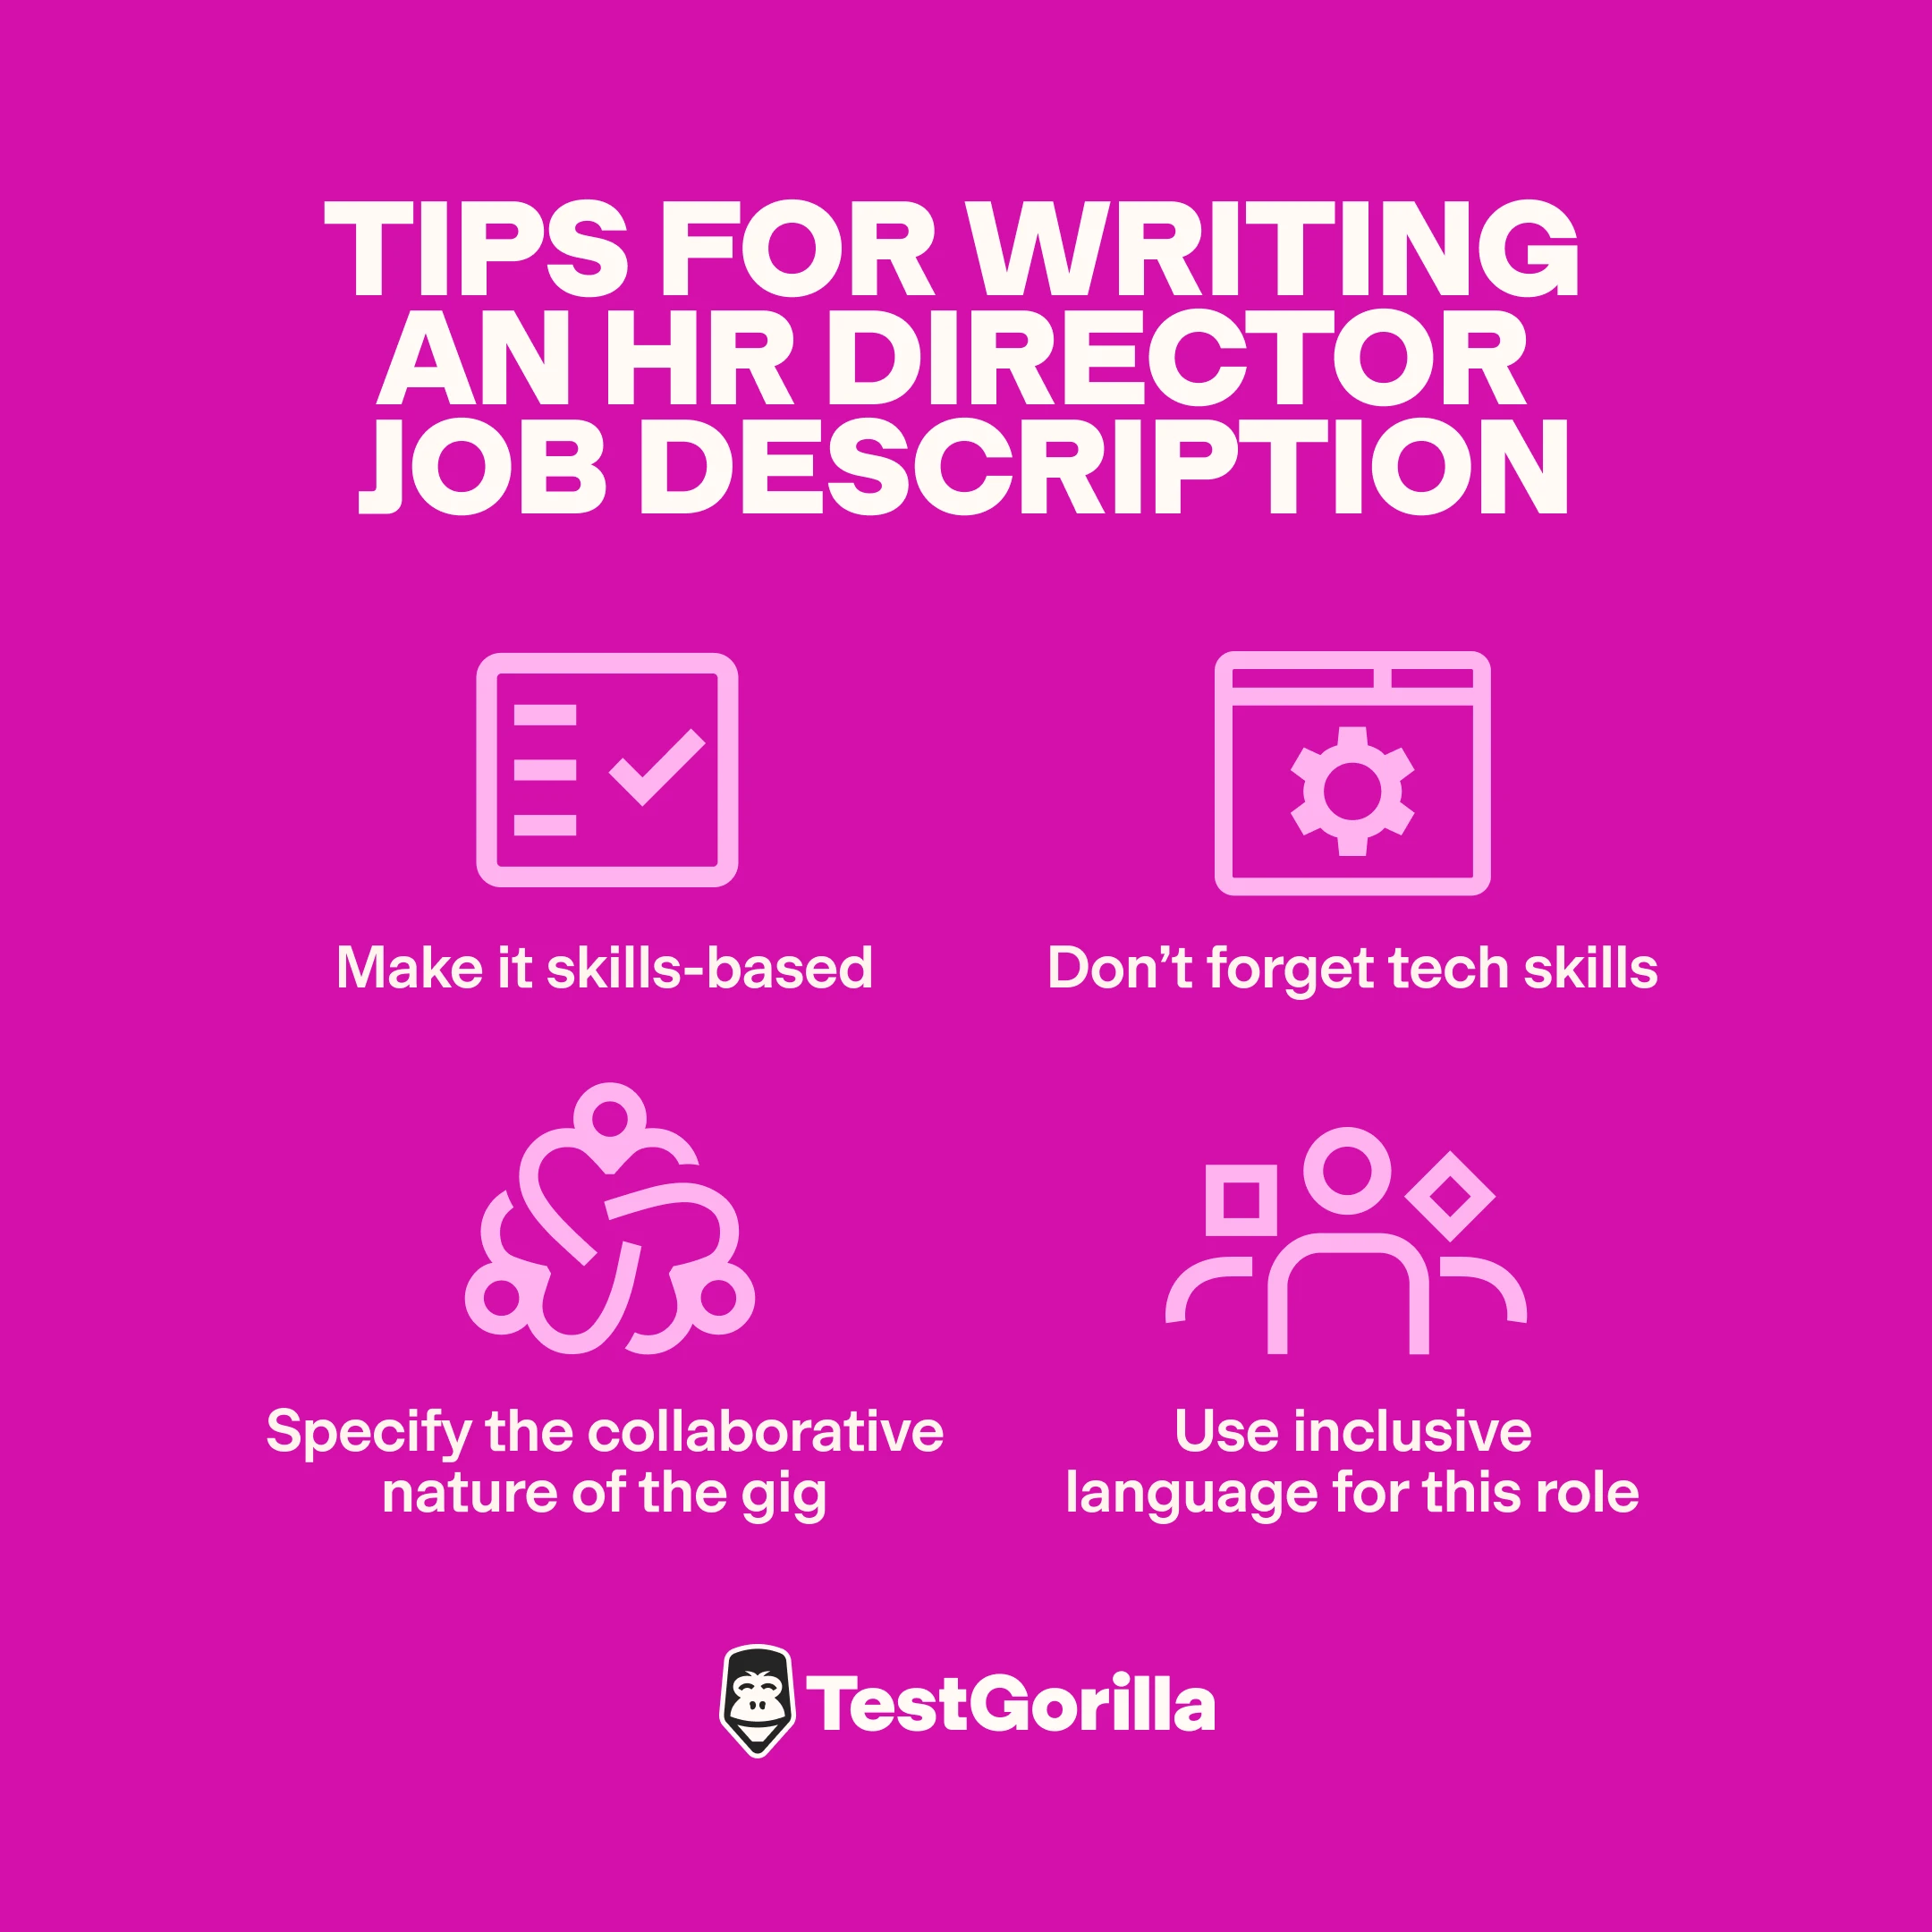 Tips for writing an HR director job description 